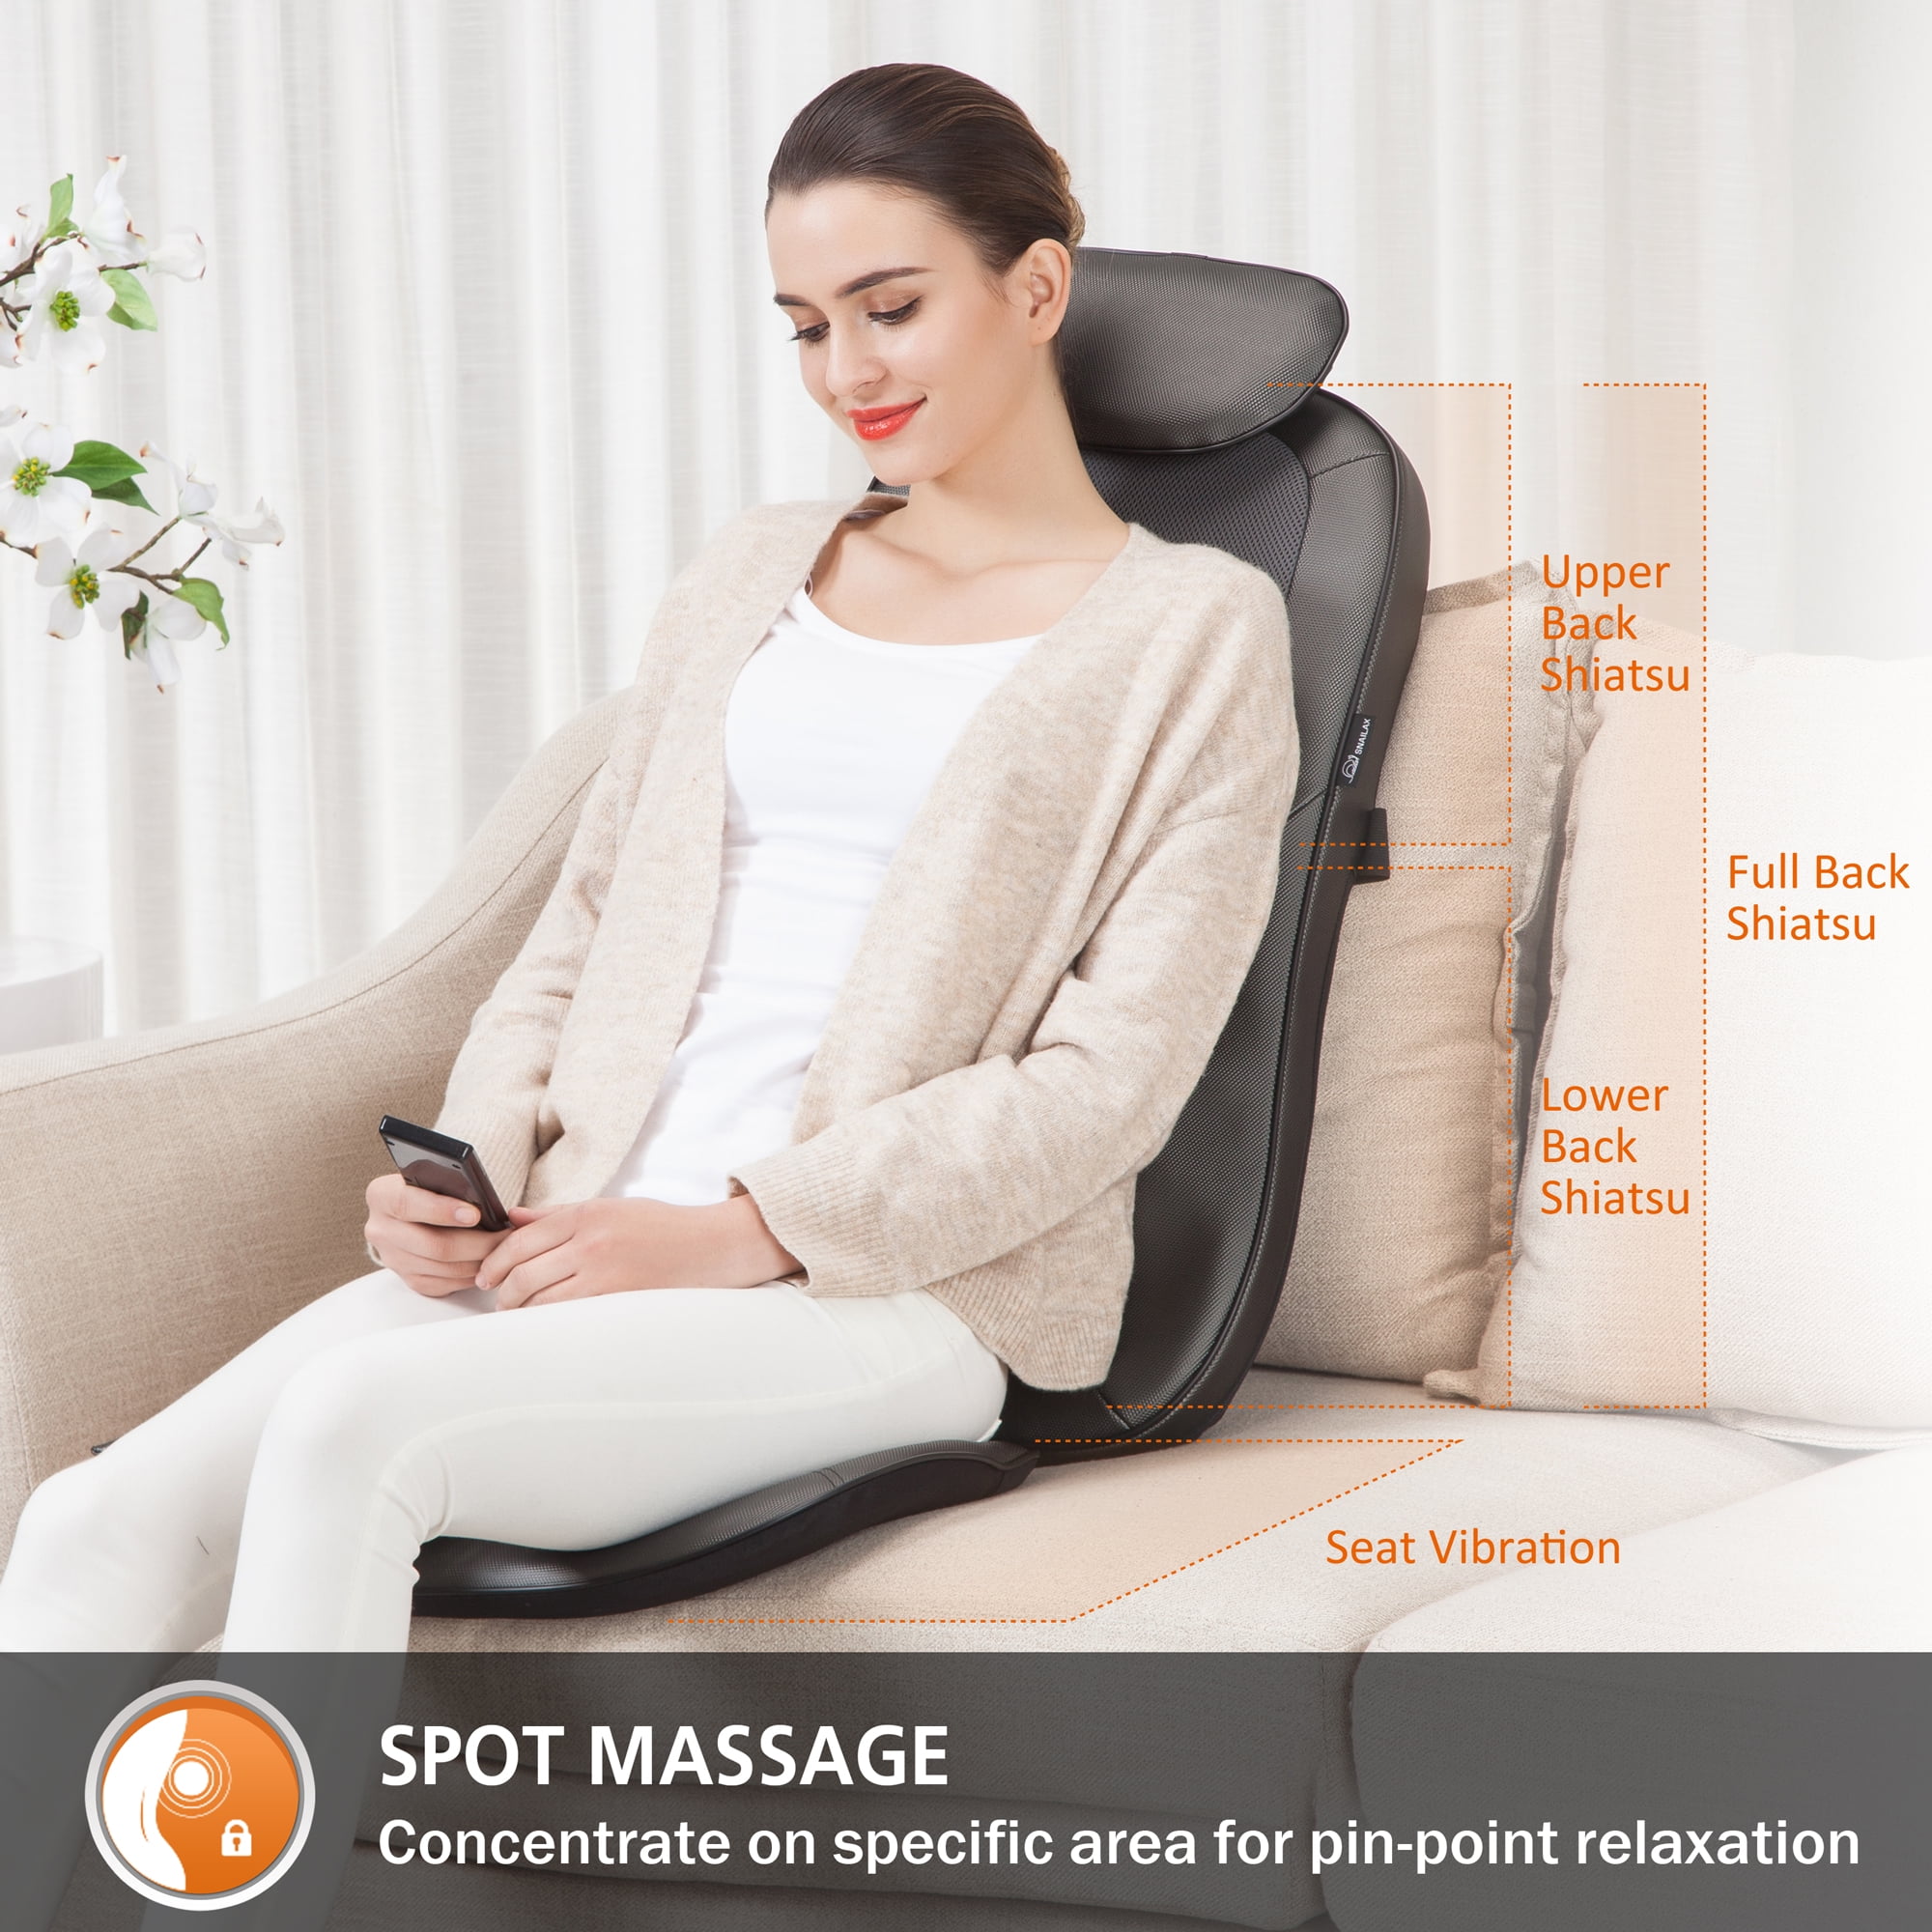 SNAILAX Shiatsu Back Massager with Heat and Deep Kneading Massage Chair Pad  - 234